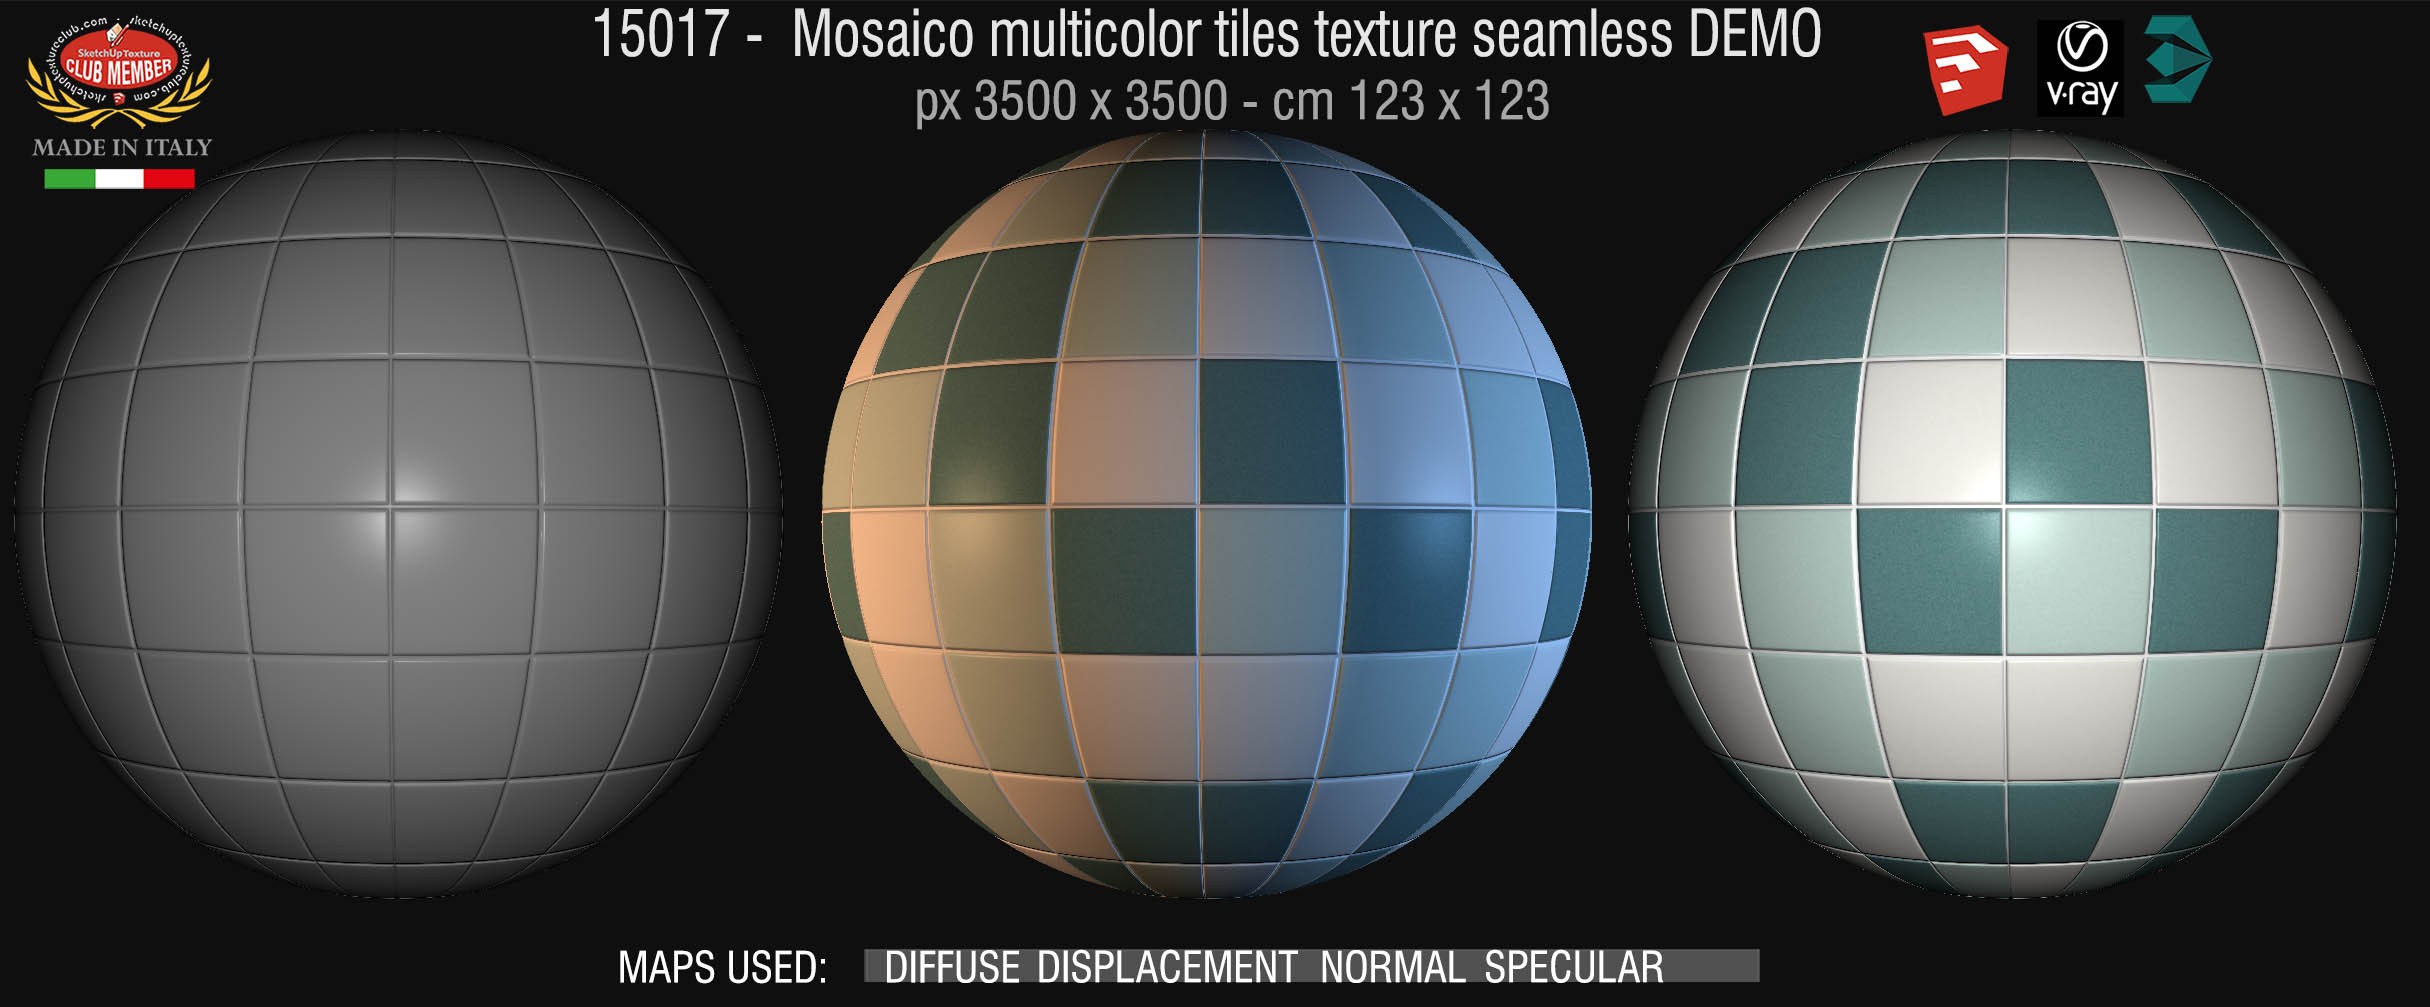 15017 Mosaico multicolor tiles texture seamless + maps DEMO